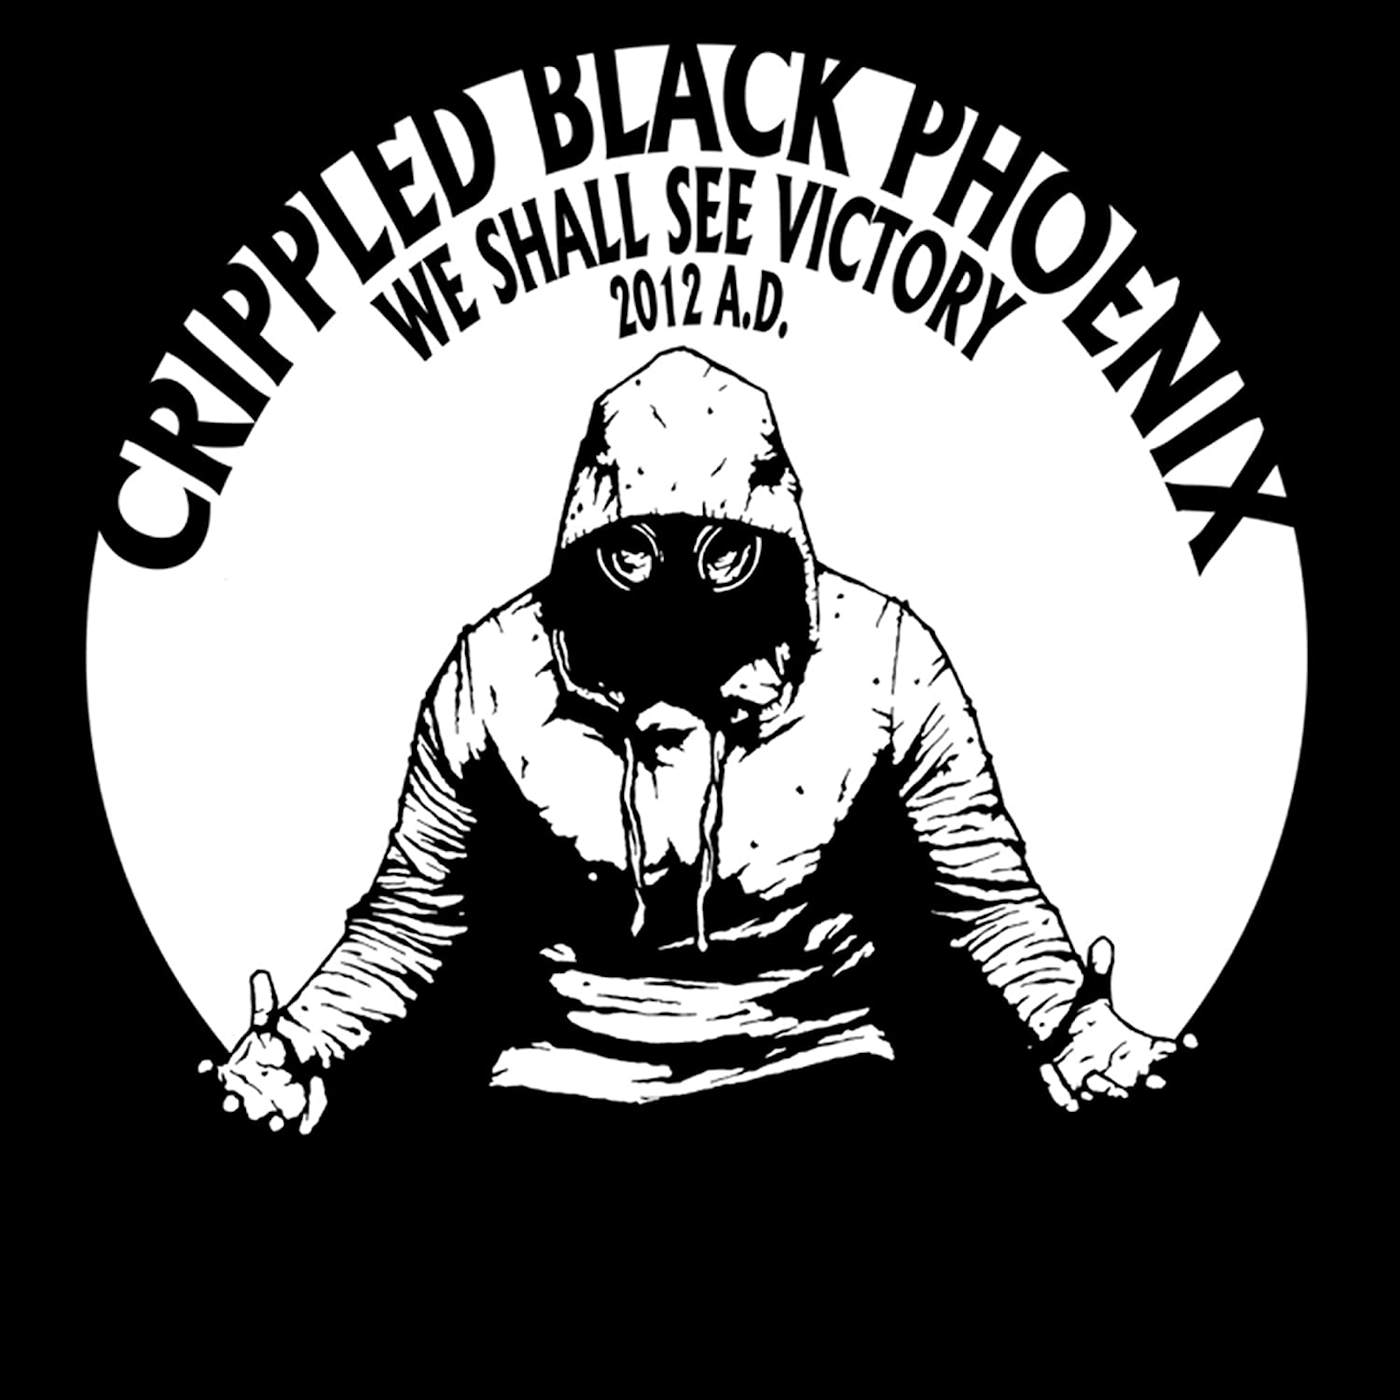 Crippled Black Phoenix WE SHALL SEE VICTORY CD